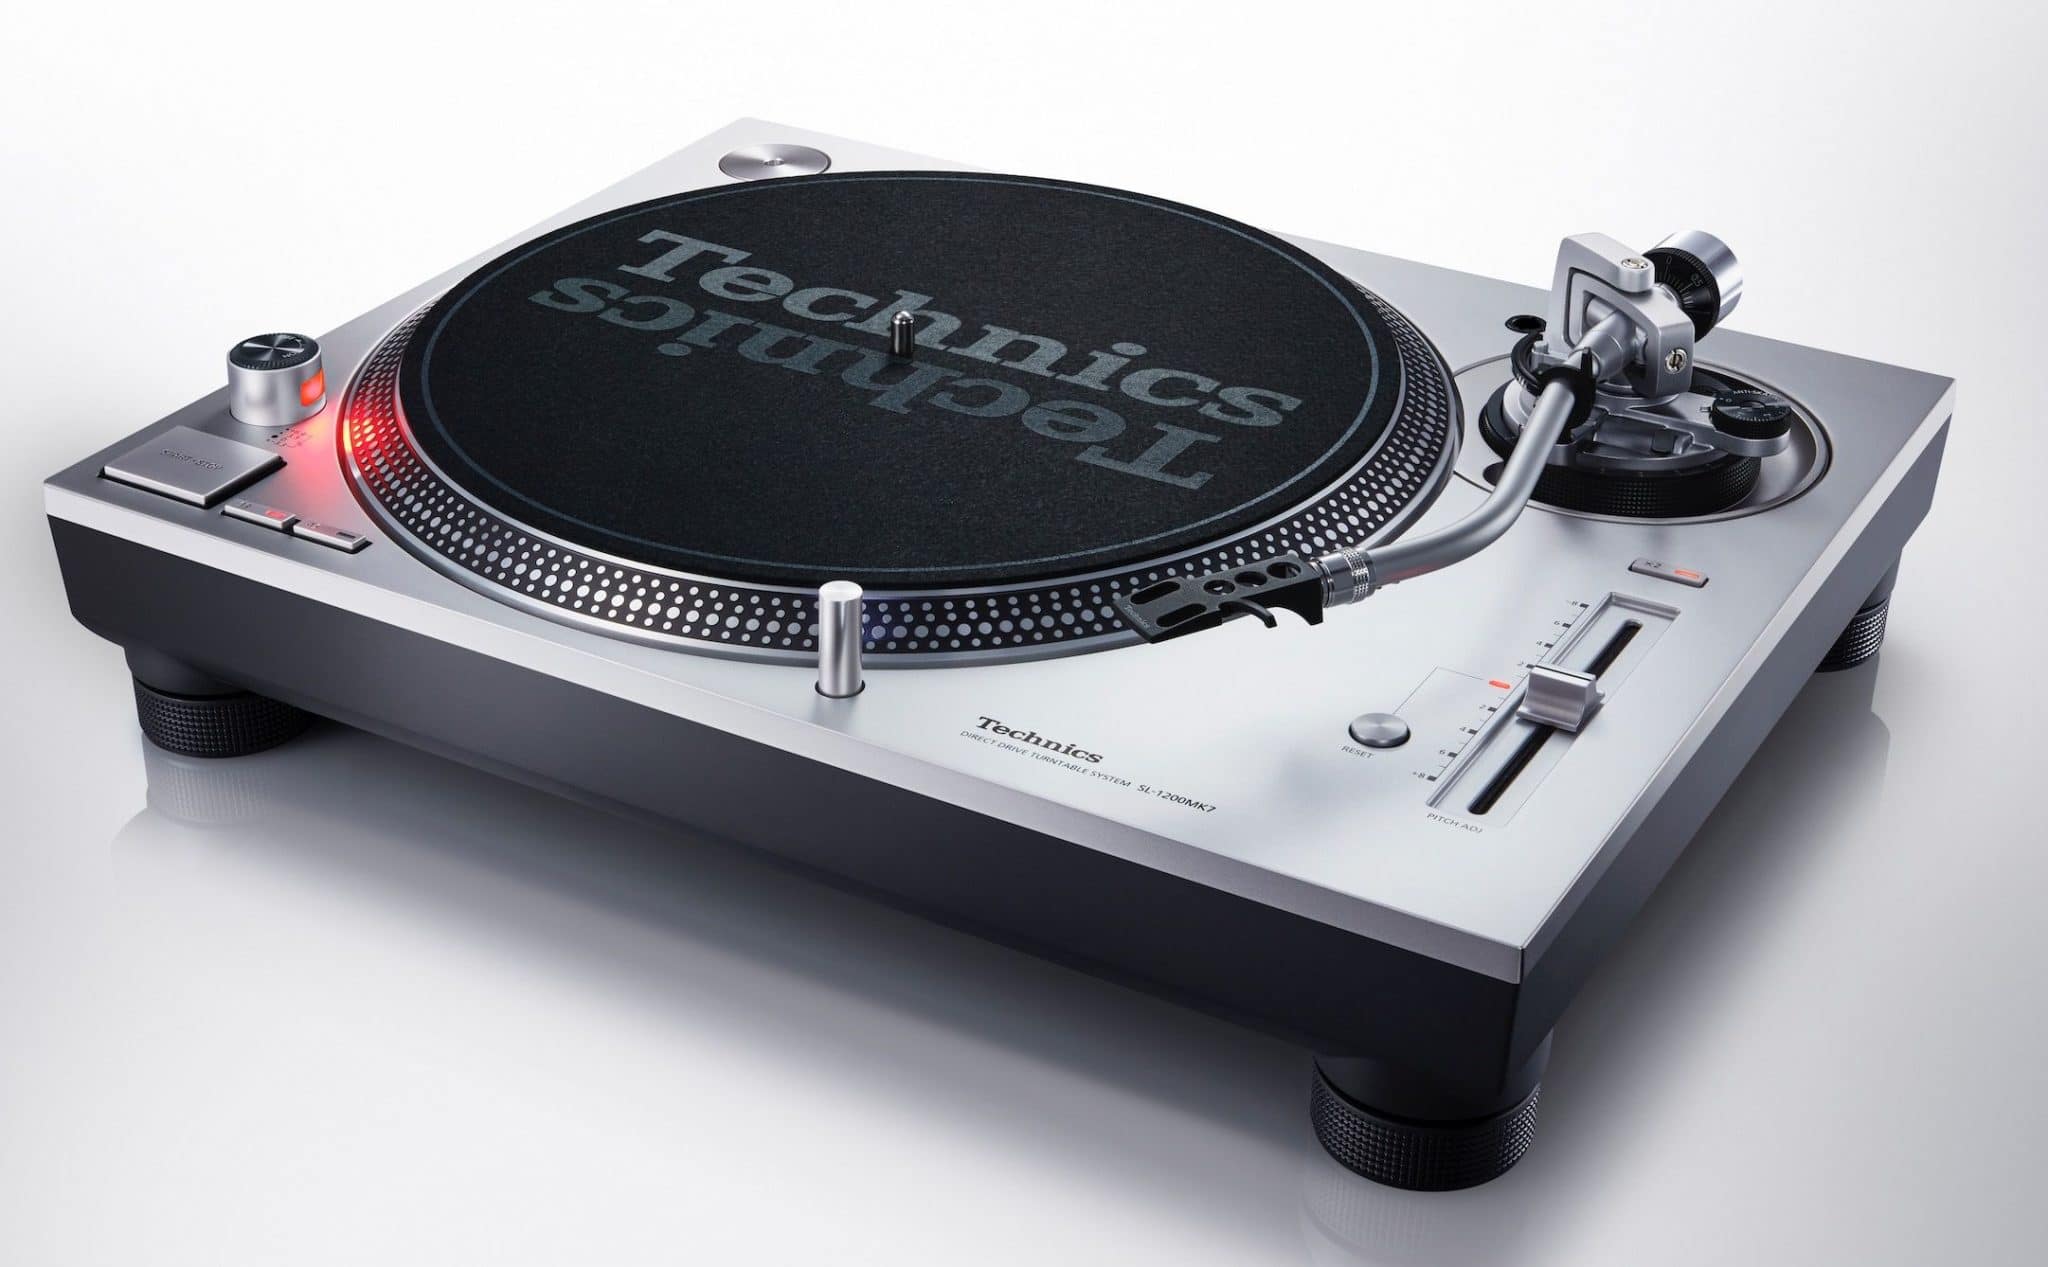 SL-1200MK7 DJ Turntable From Technics